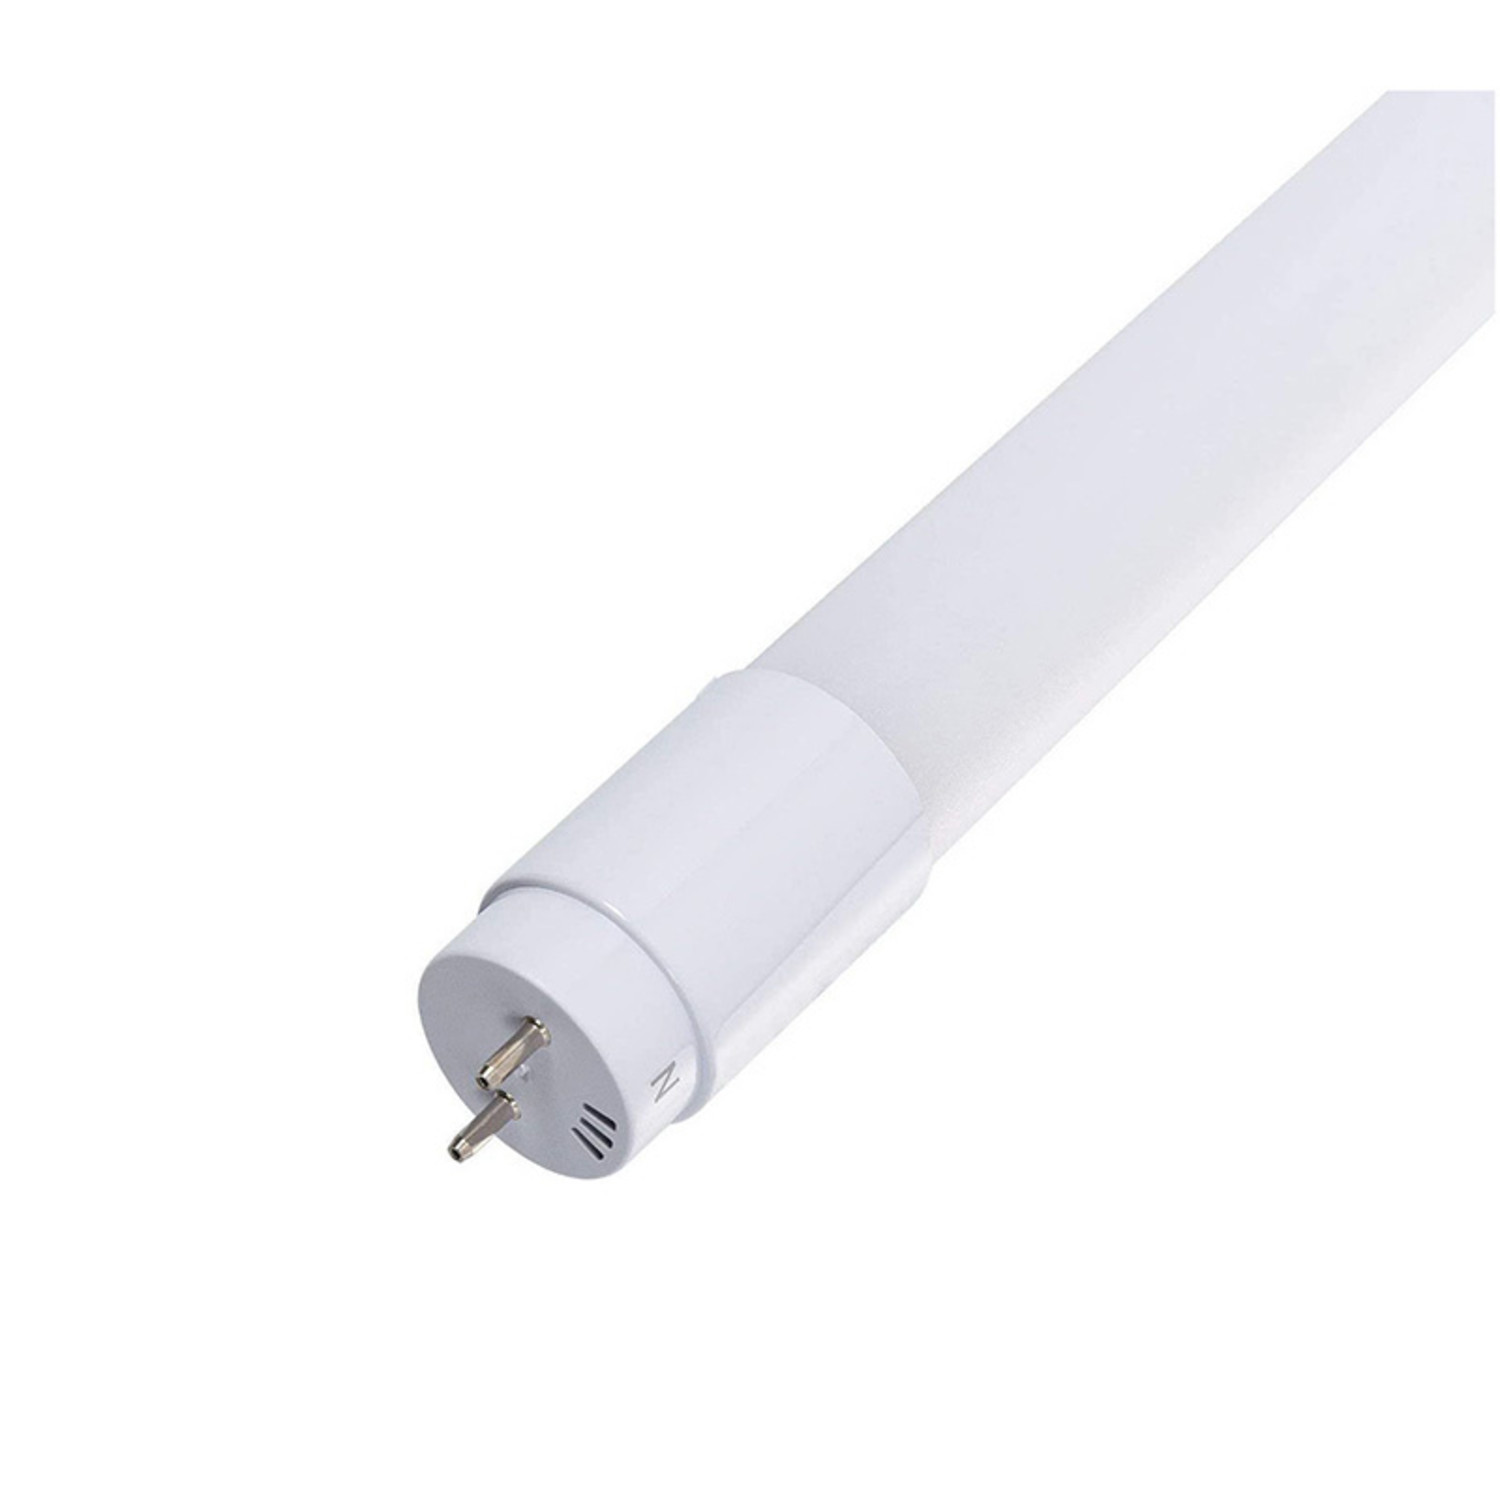 Azië plastic markeerstift LED TL buis 60cm - 9W vervangt 18W - 3000K (830) warm wit licht -  Ledlichtdiscounter.nl